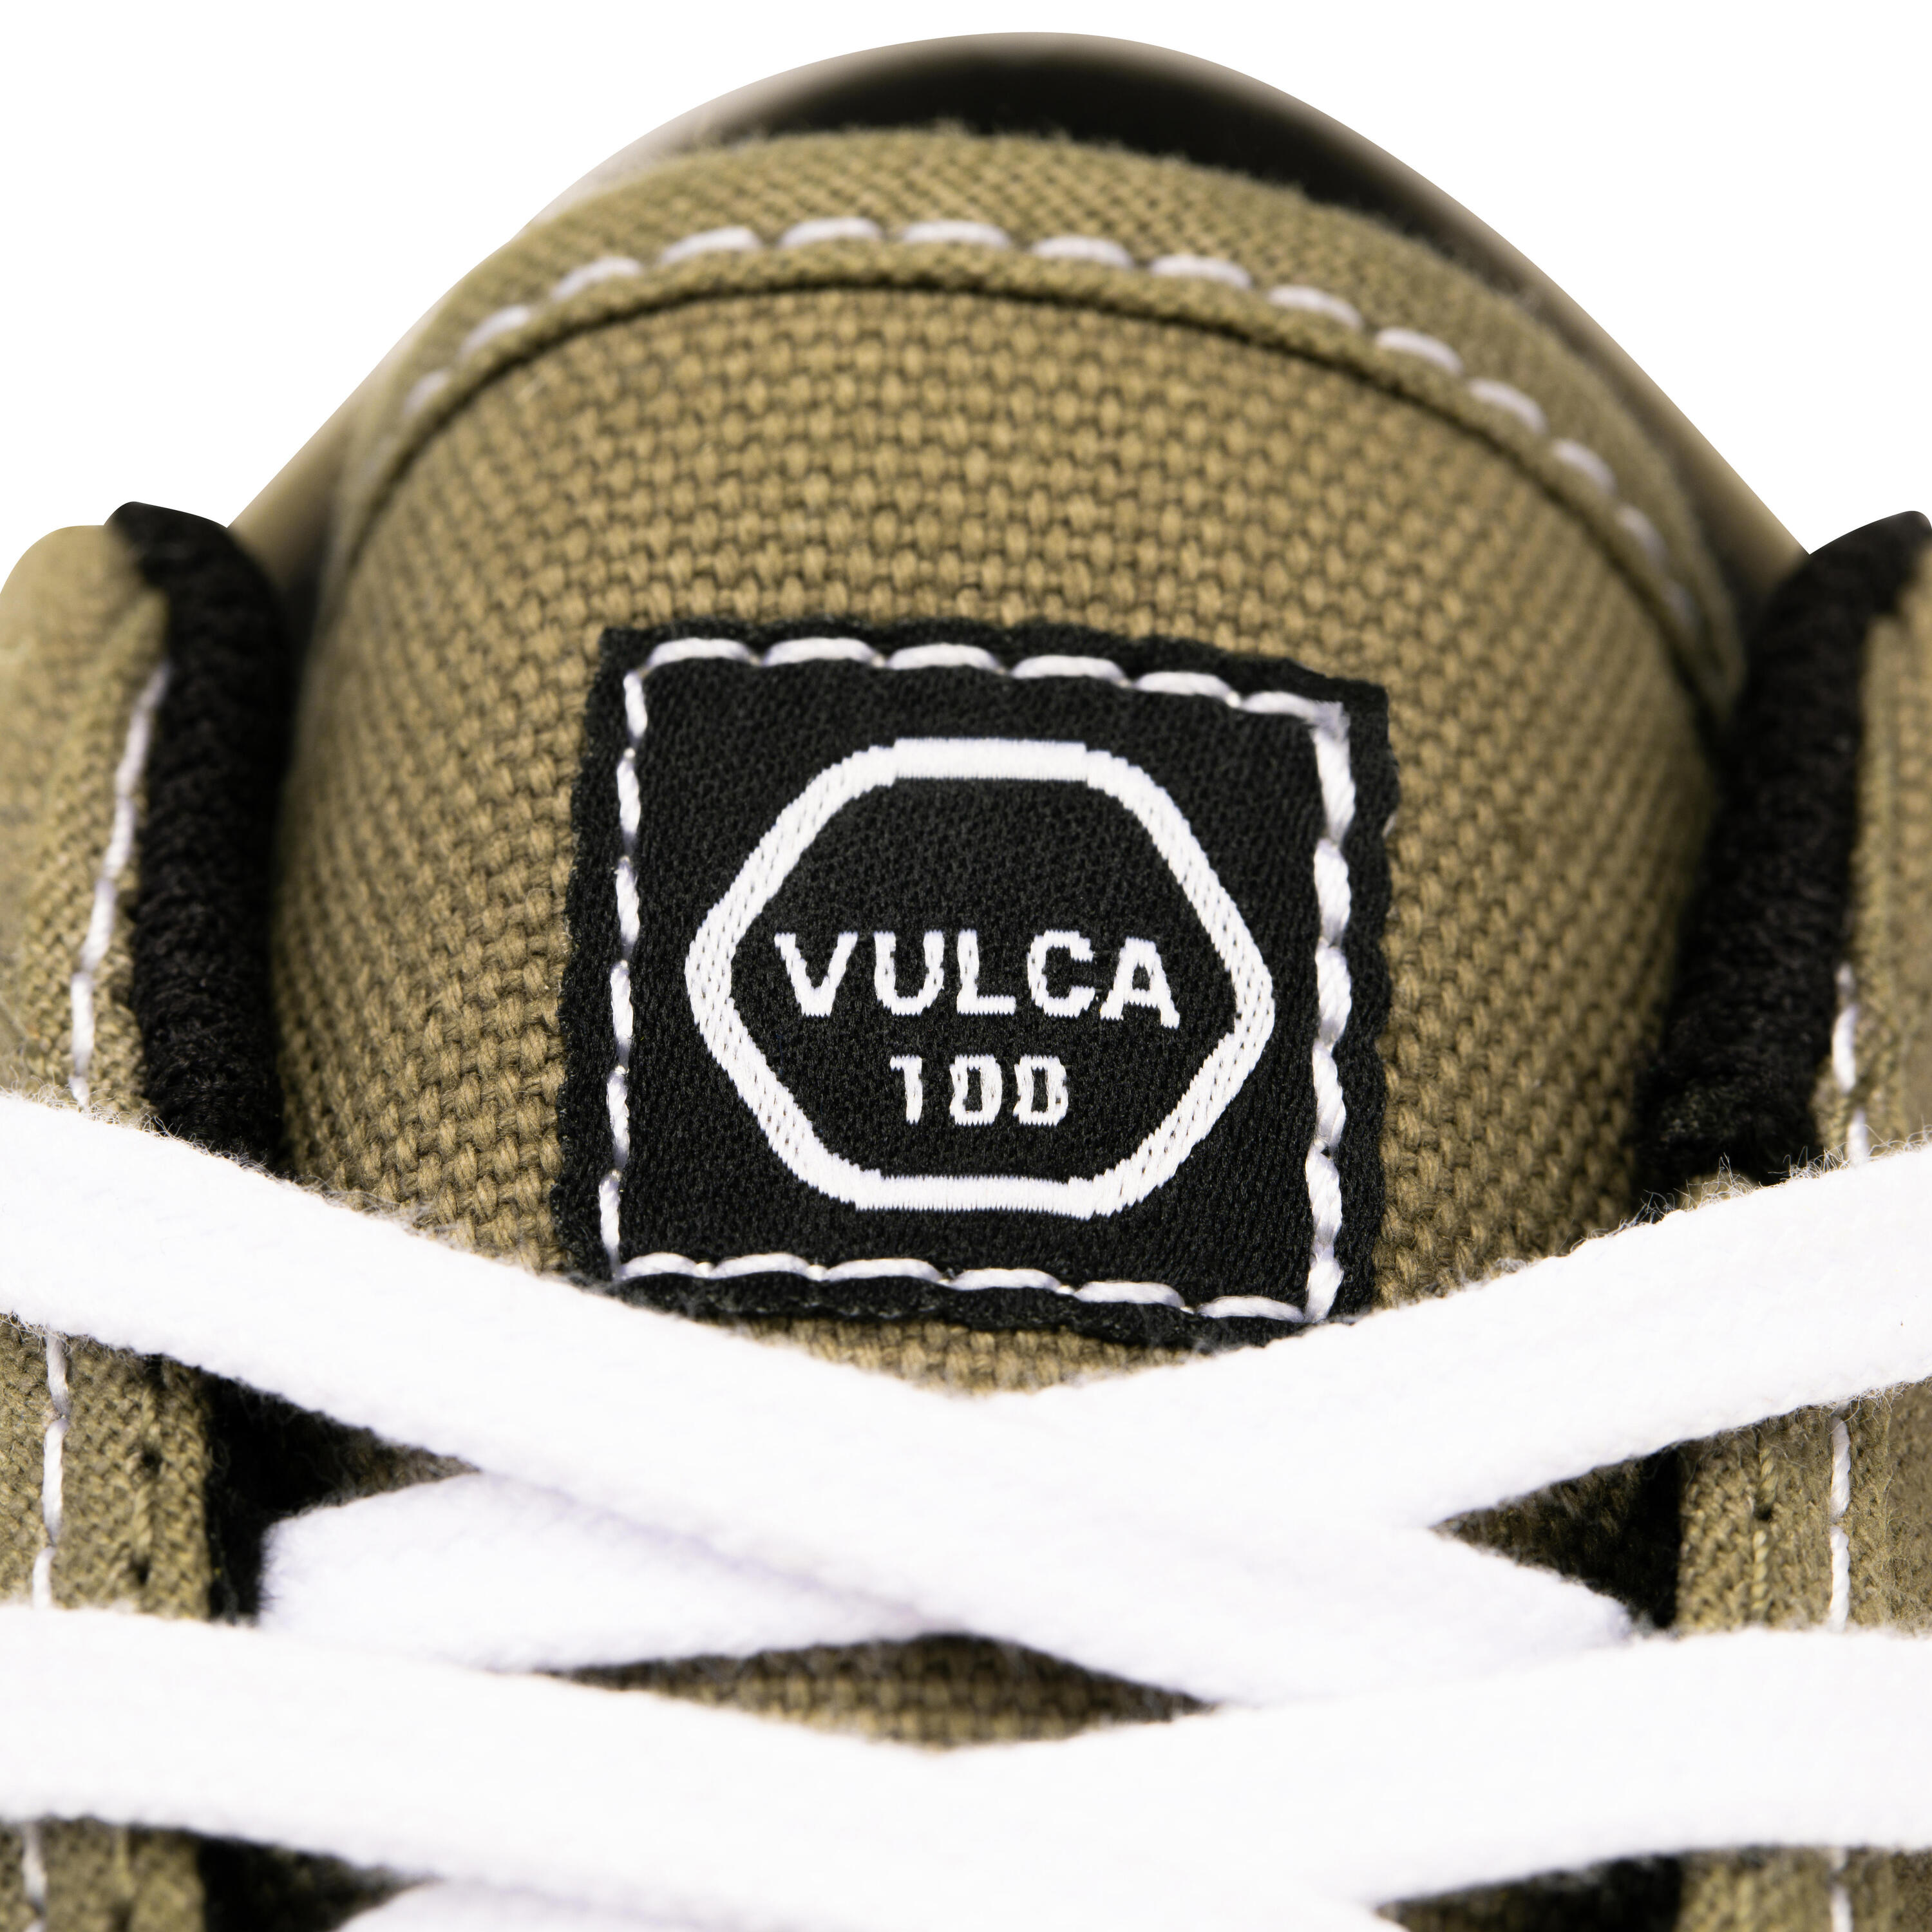 Adult Skateboarding Longboarding Low-Top Shoes Vulca 100 - Khaki/White 11/15